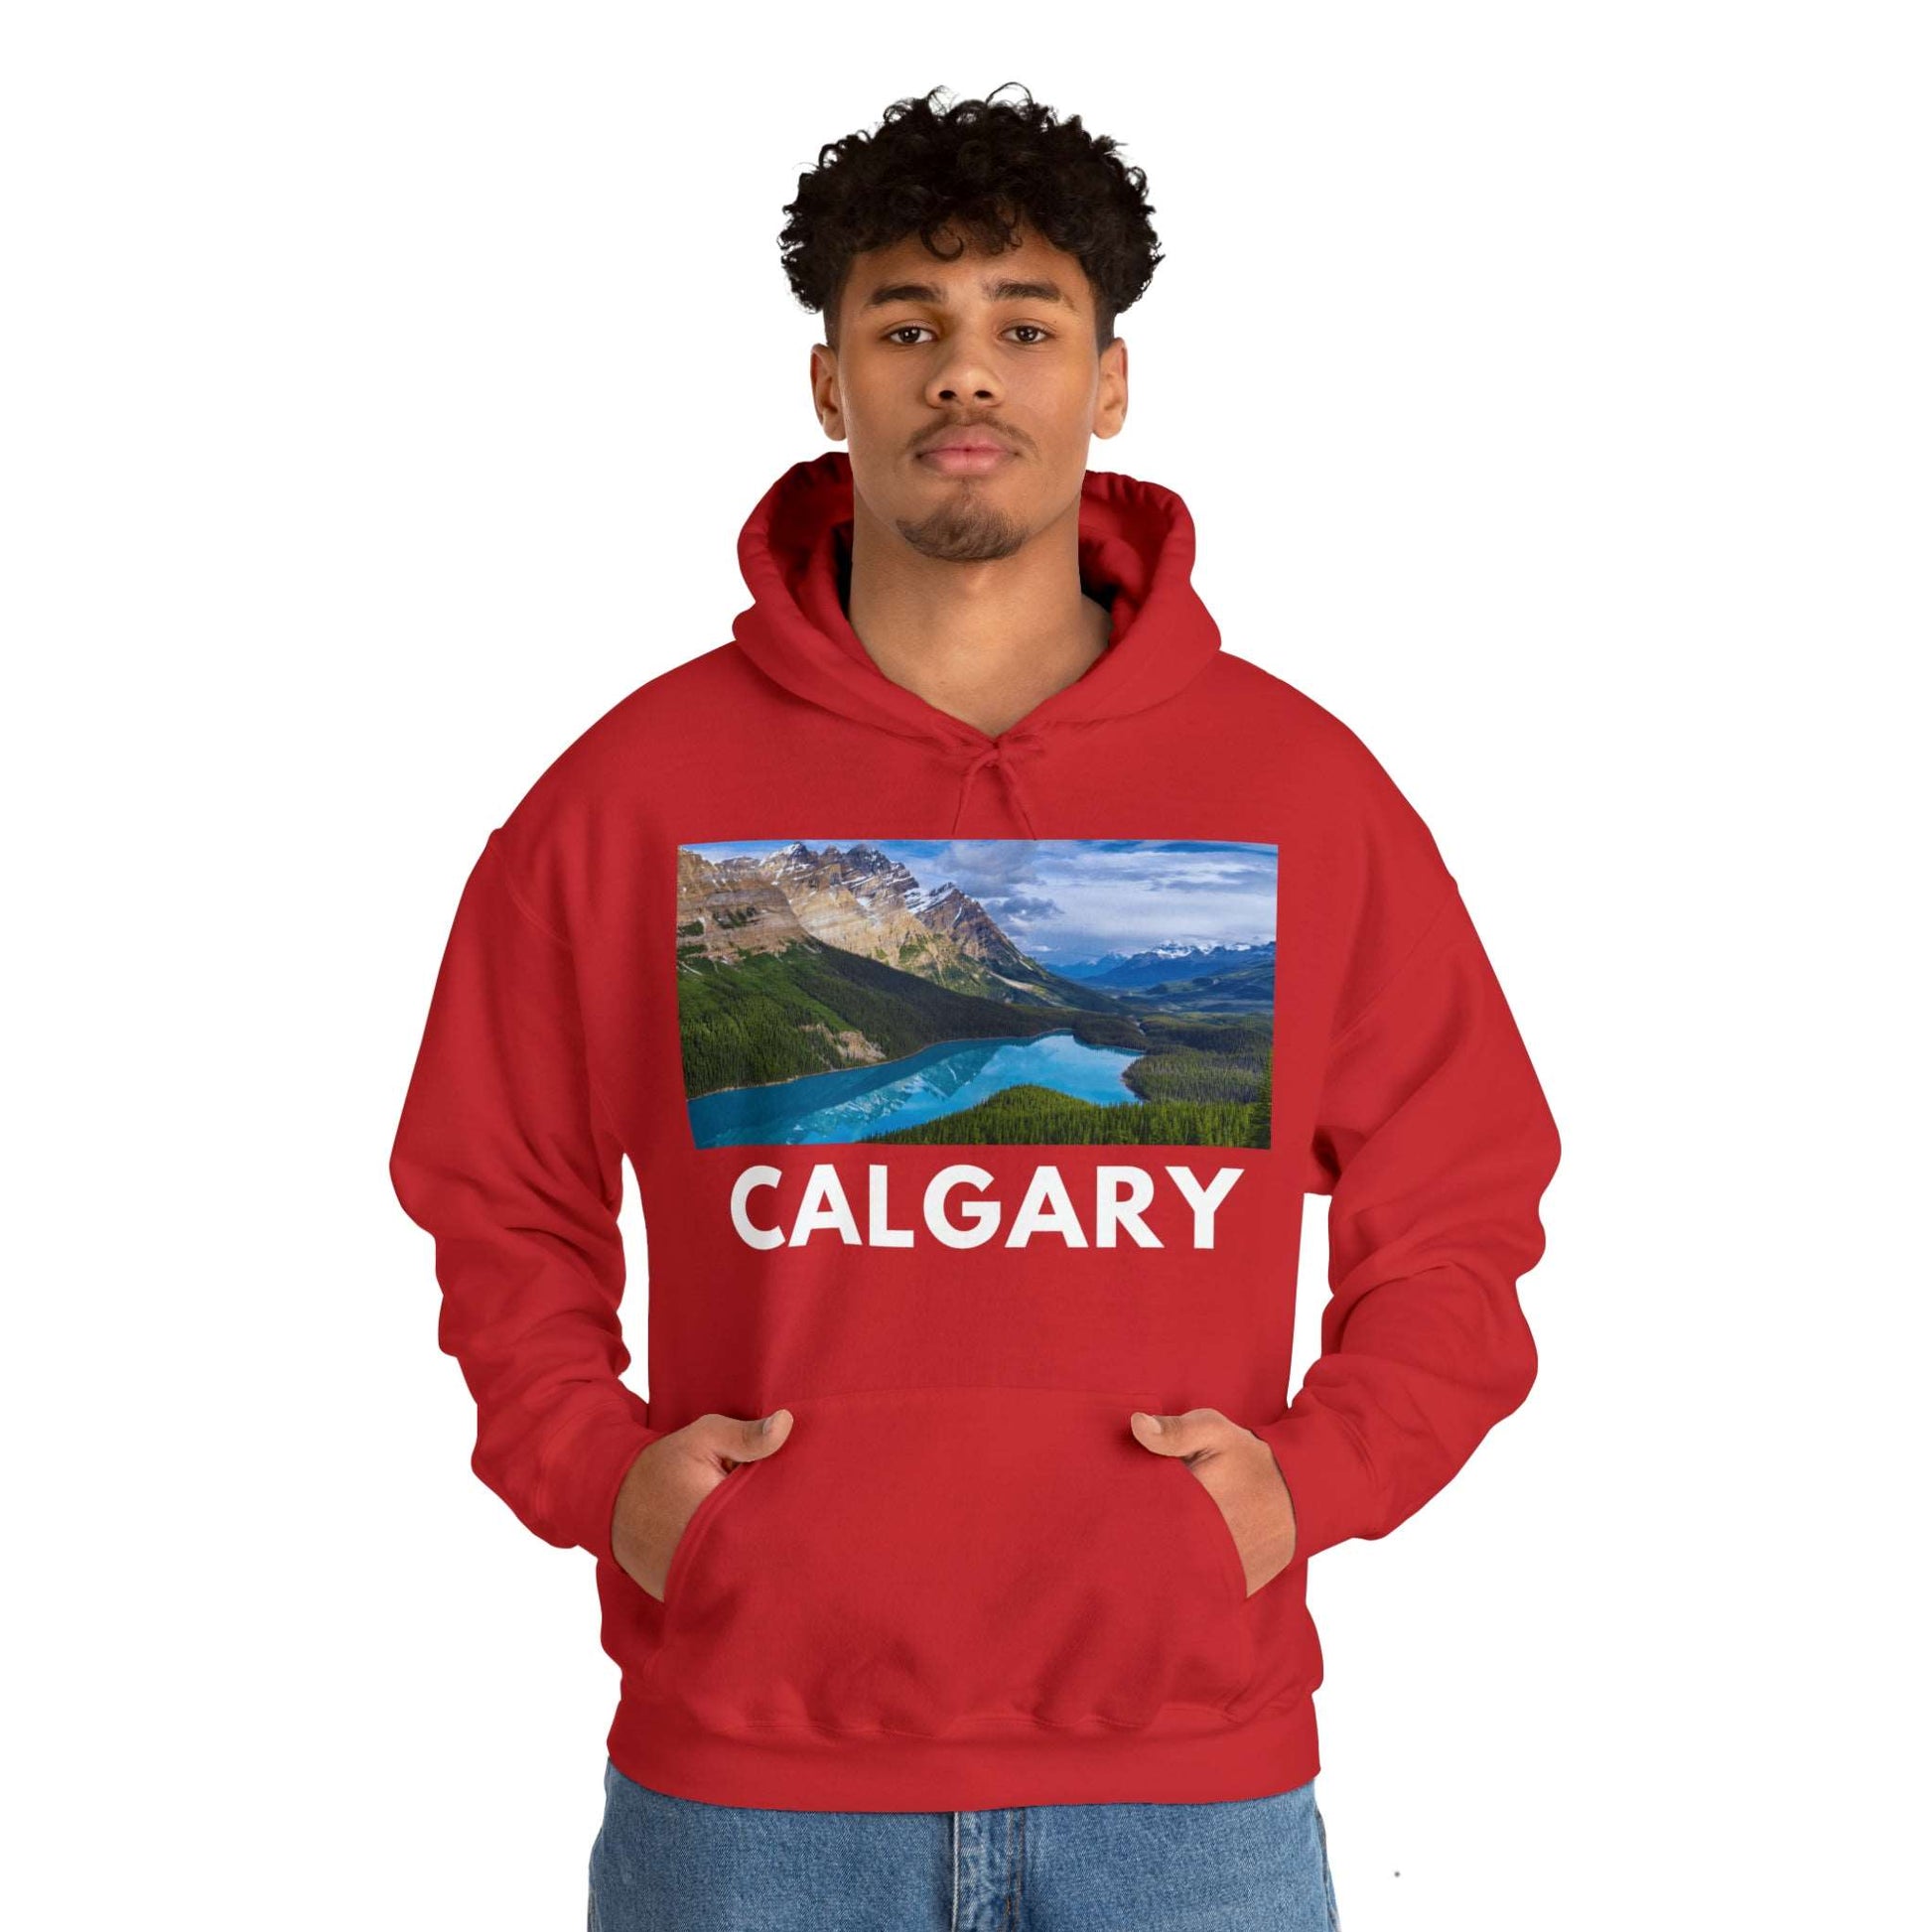   Calgary Hoodie: City Escape from HoodySZN.com